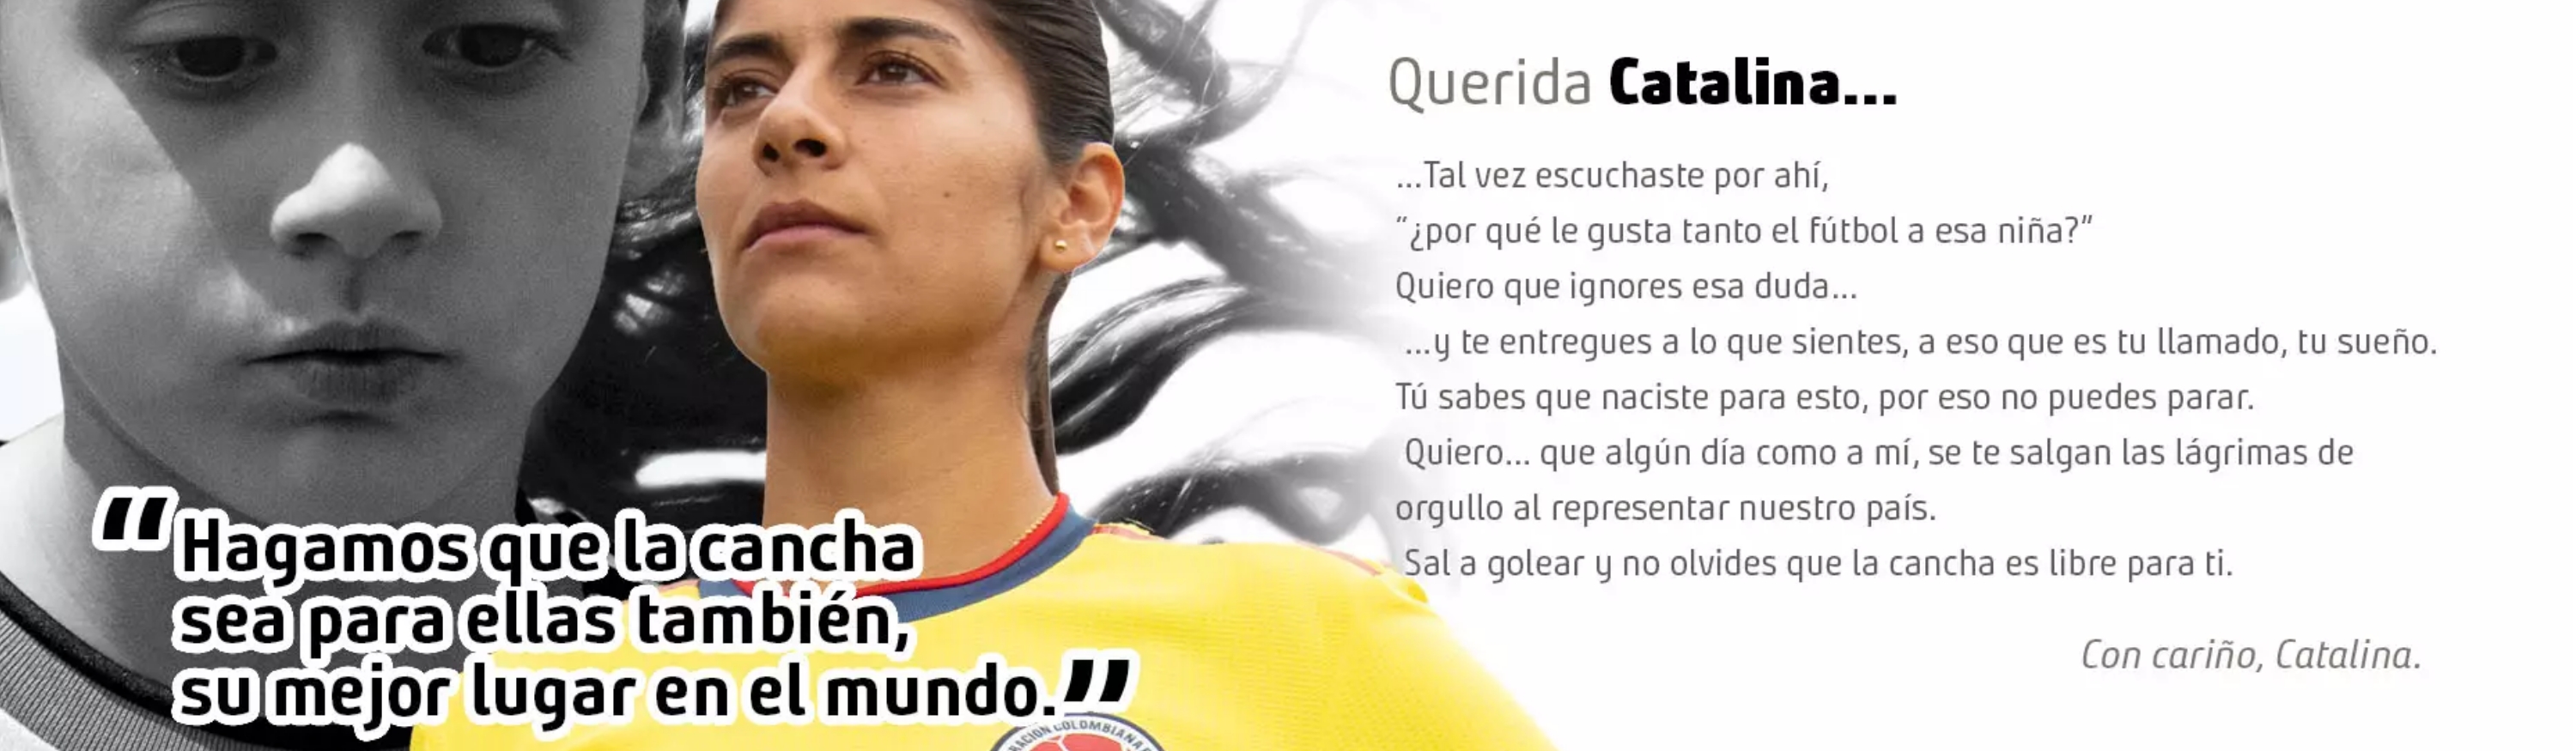 Futbol femenino cancha libre de estereotipos Catalina Usme